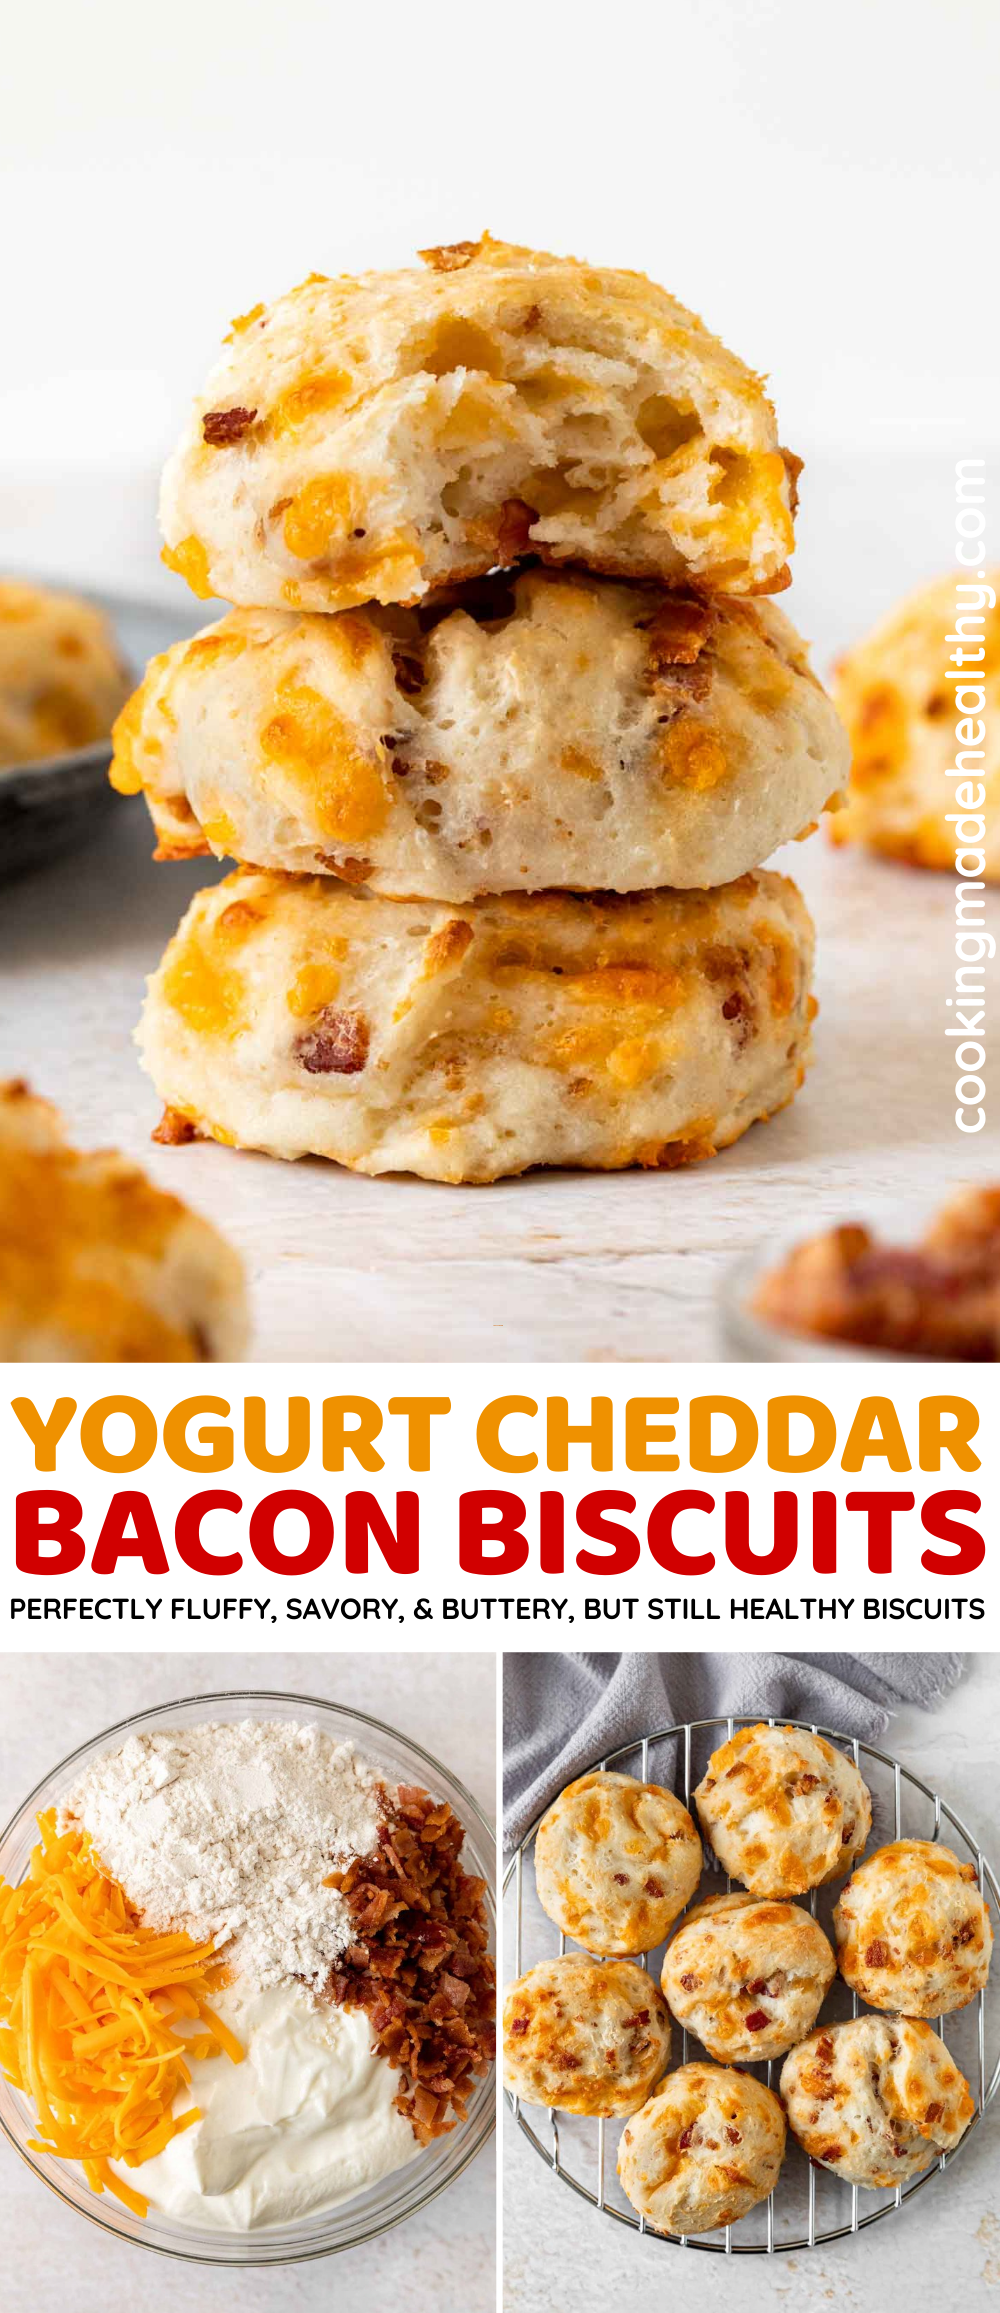 Yogurt Cheddar Bacon Biscuits Collage